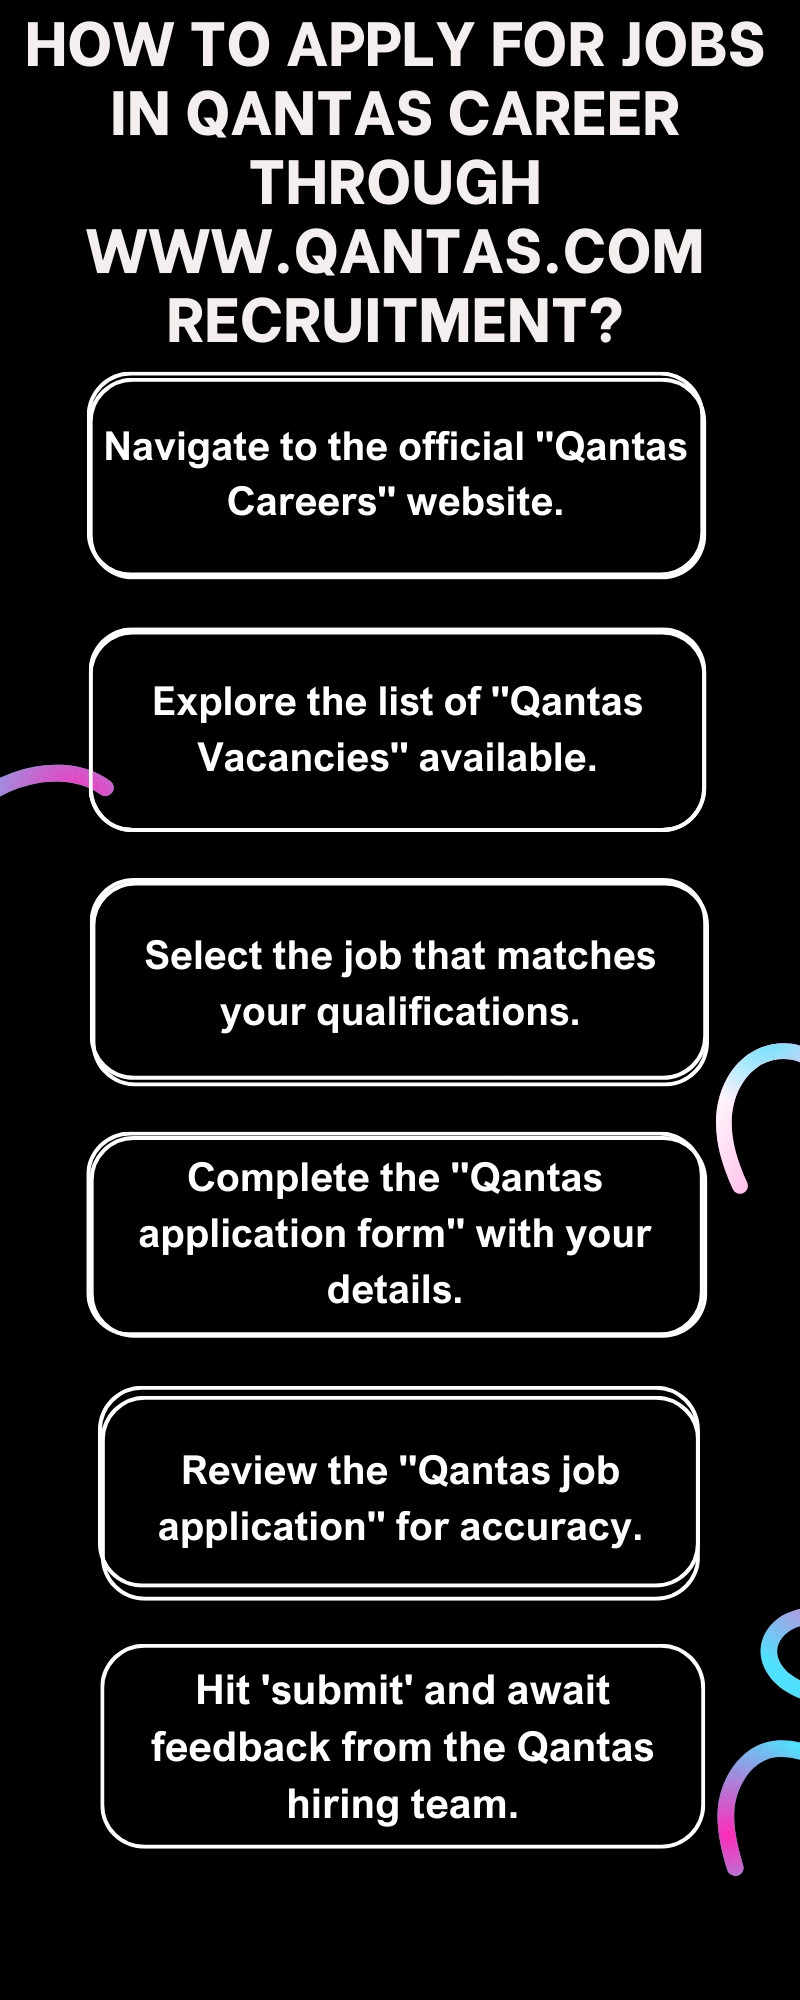 How to Apply for Jobs in Qantas Career through www.qantas.com recruitment_